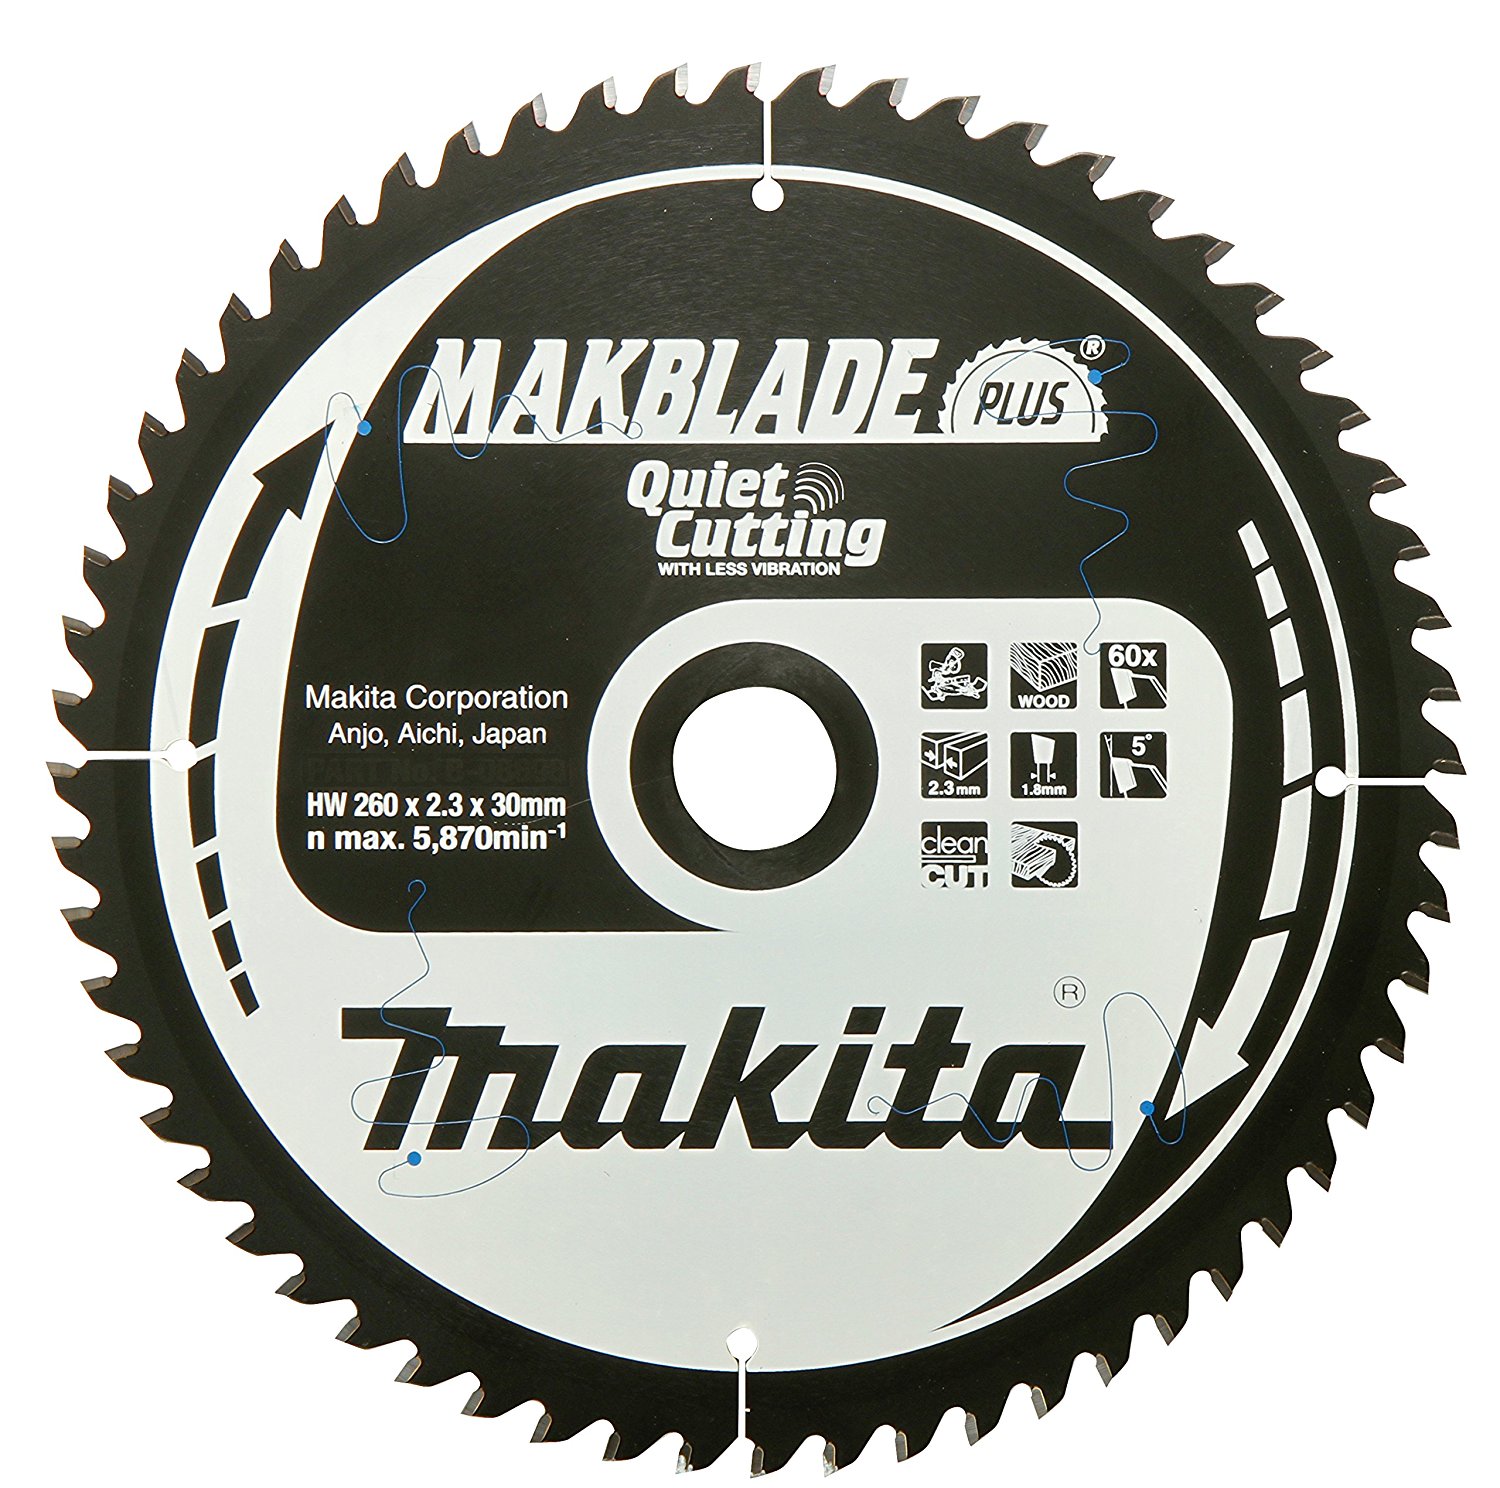 Makita Makblade Plus circular saw blade 260x30mm 60Z - B-32524